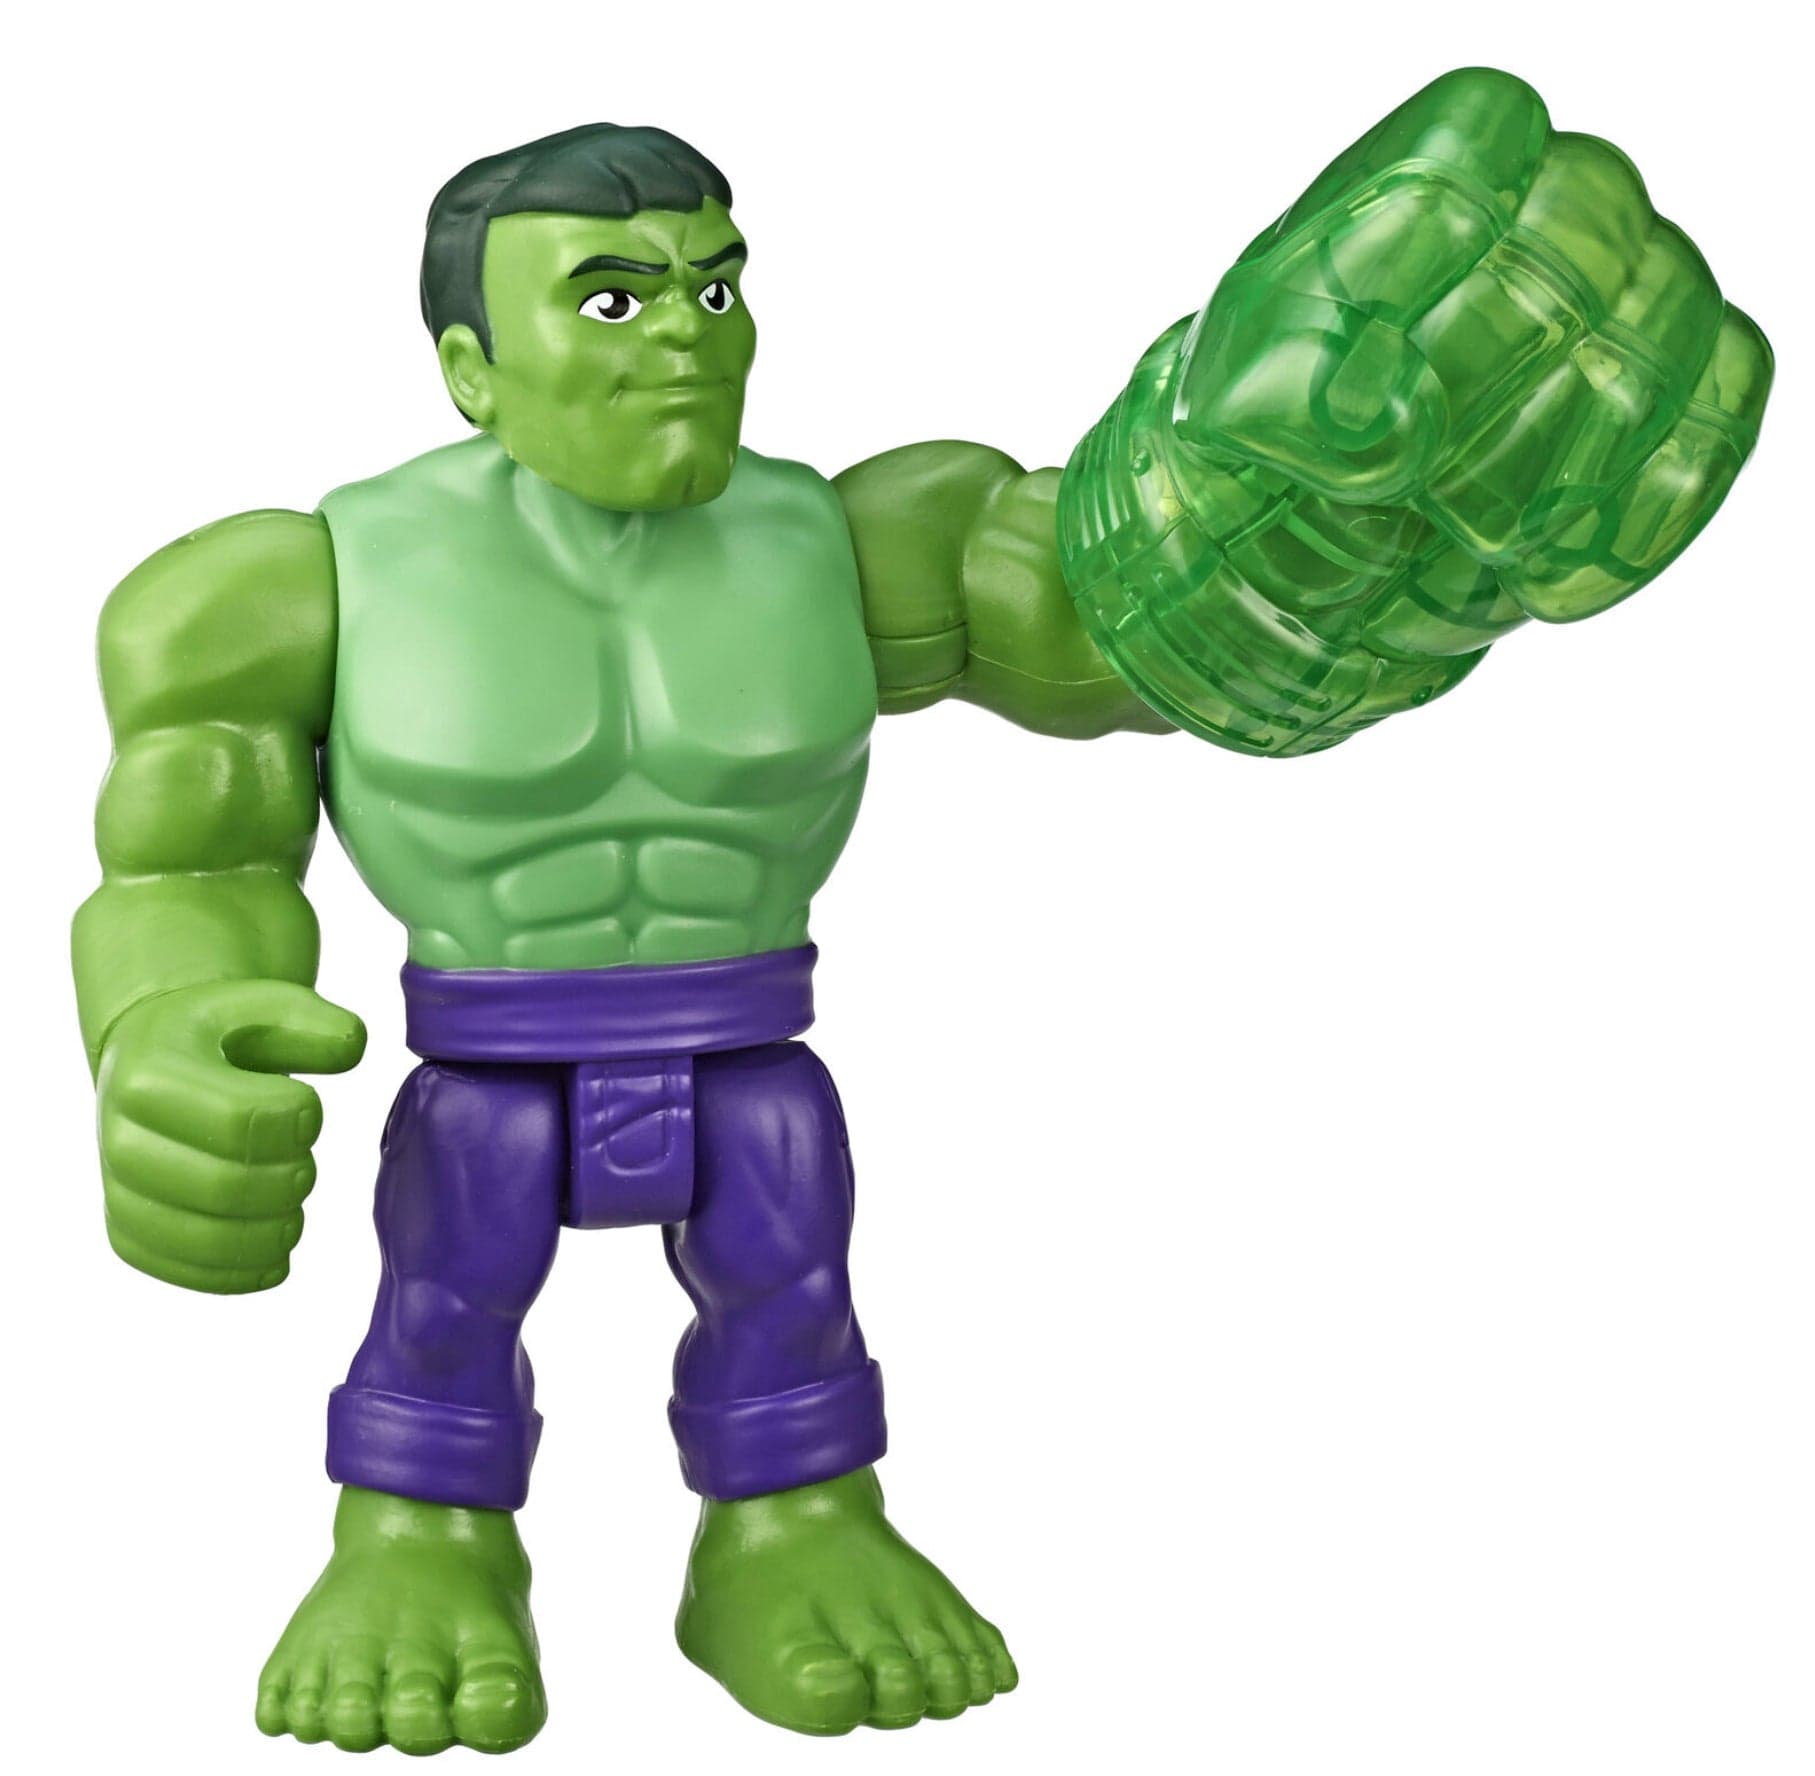 Marvel Super Hero Adventures The Hulk - Playskool Heroes Action Figure